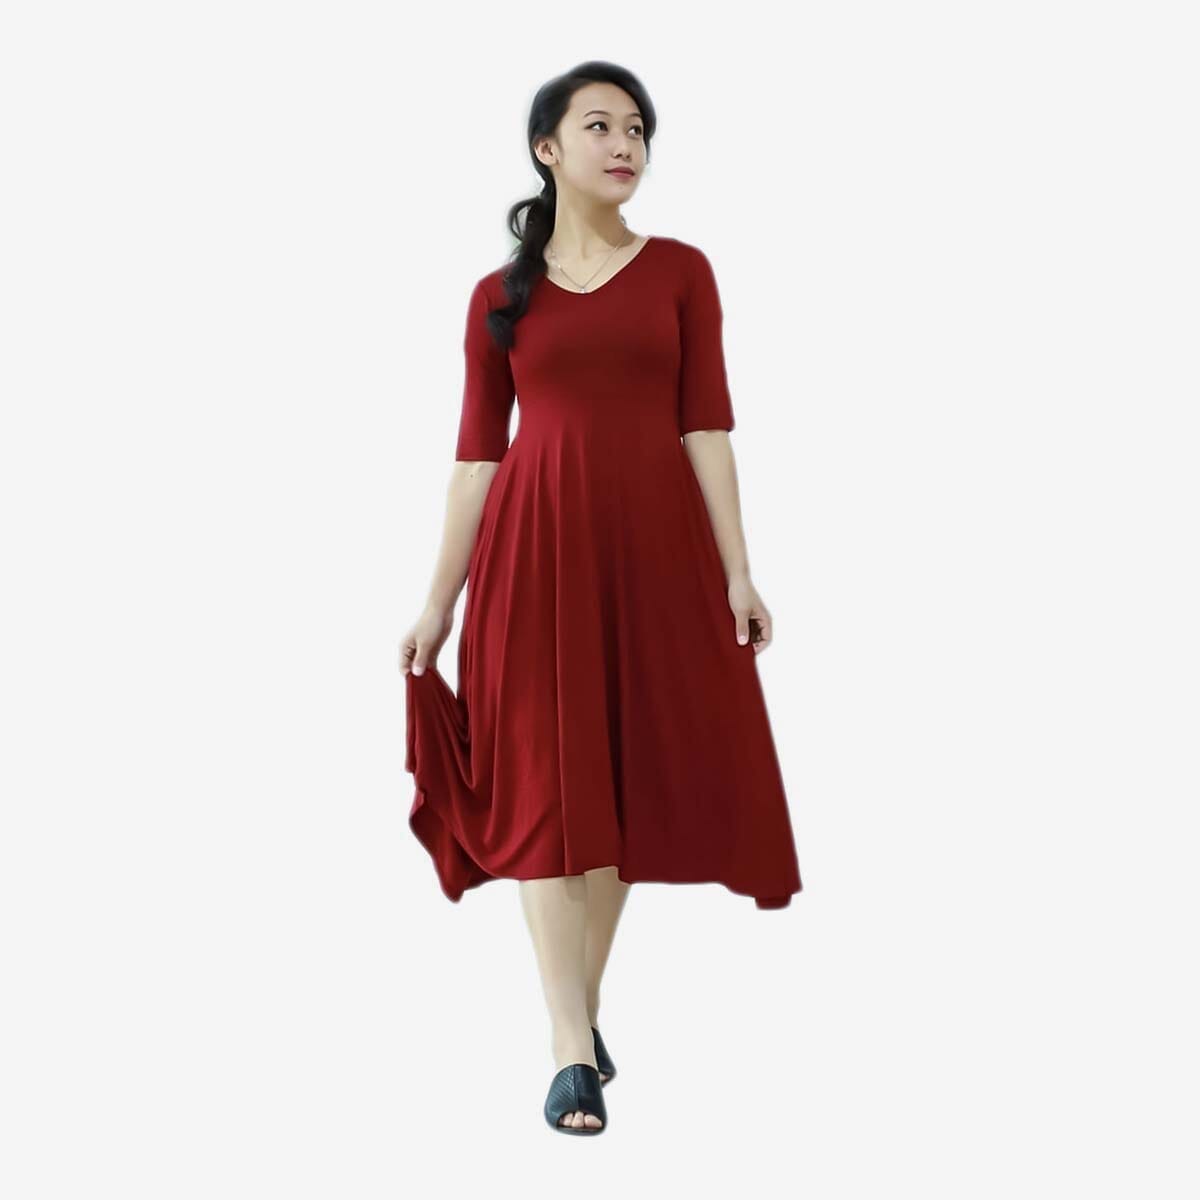 One piece | One piece gown, One piece dress long, Long dress design